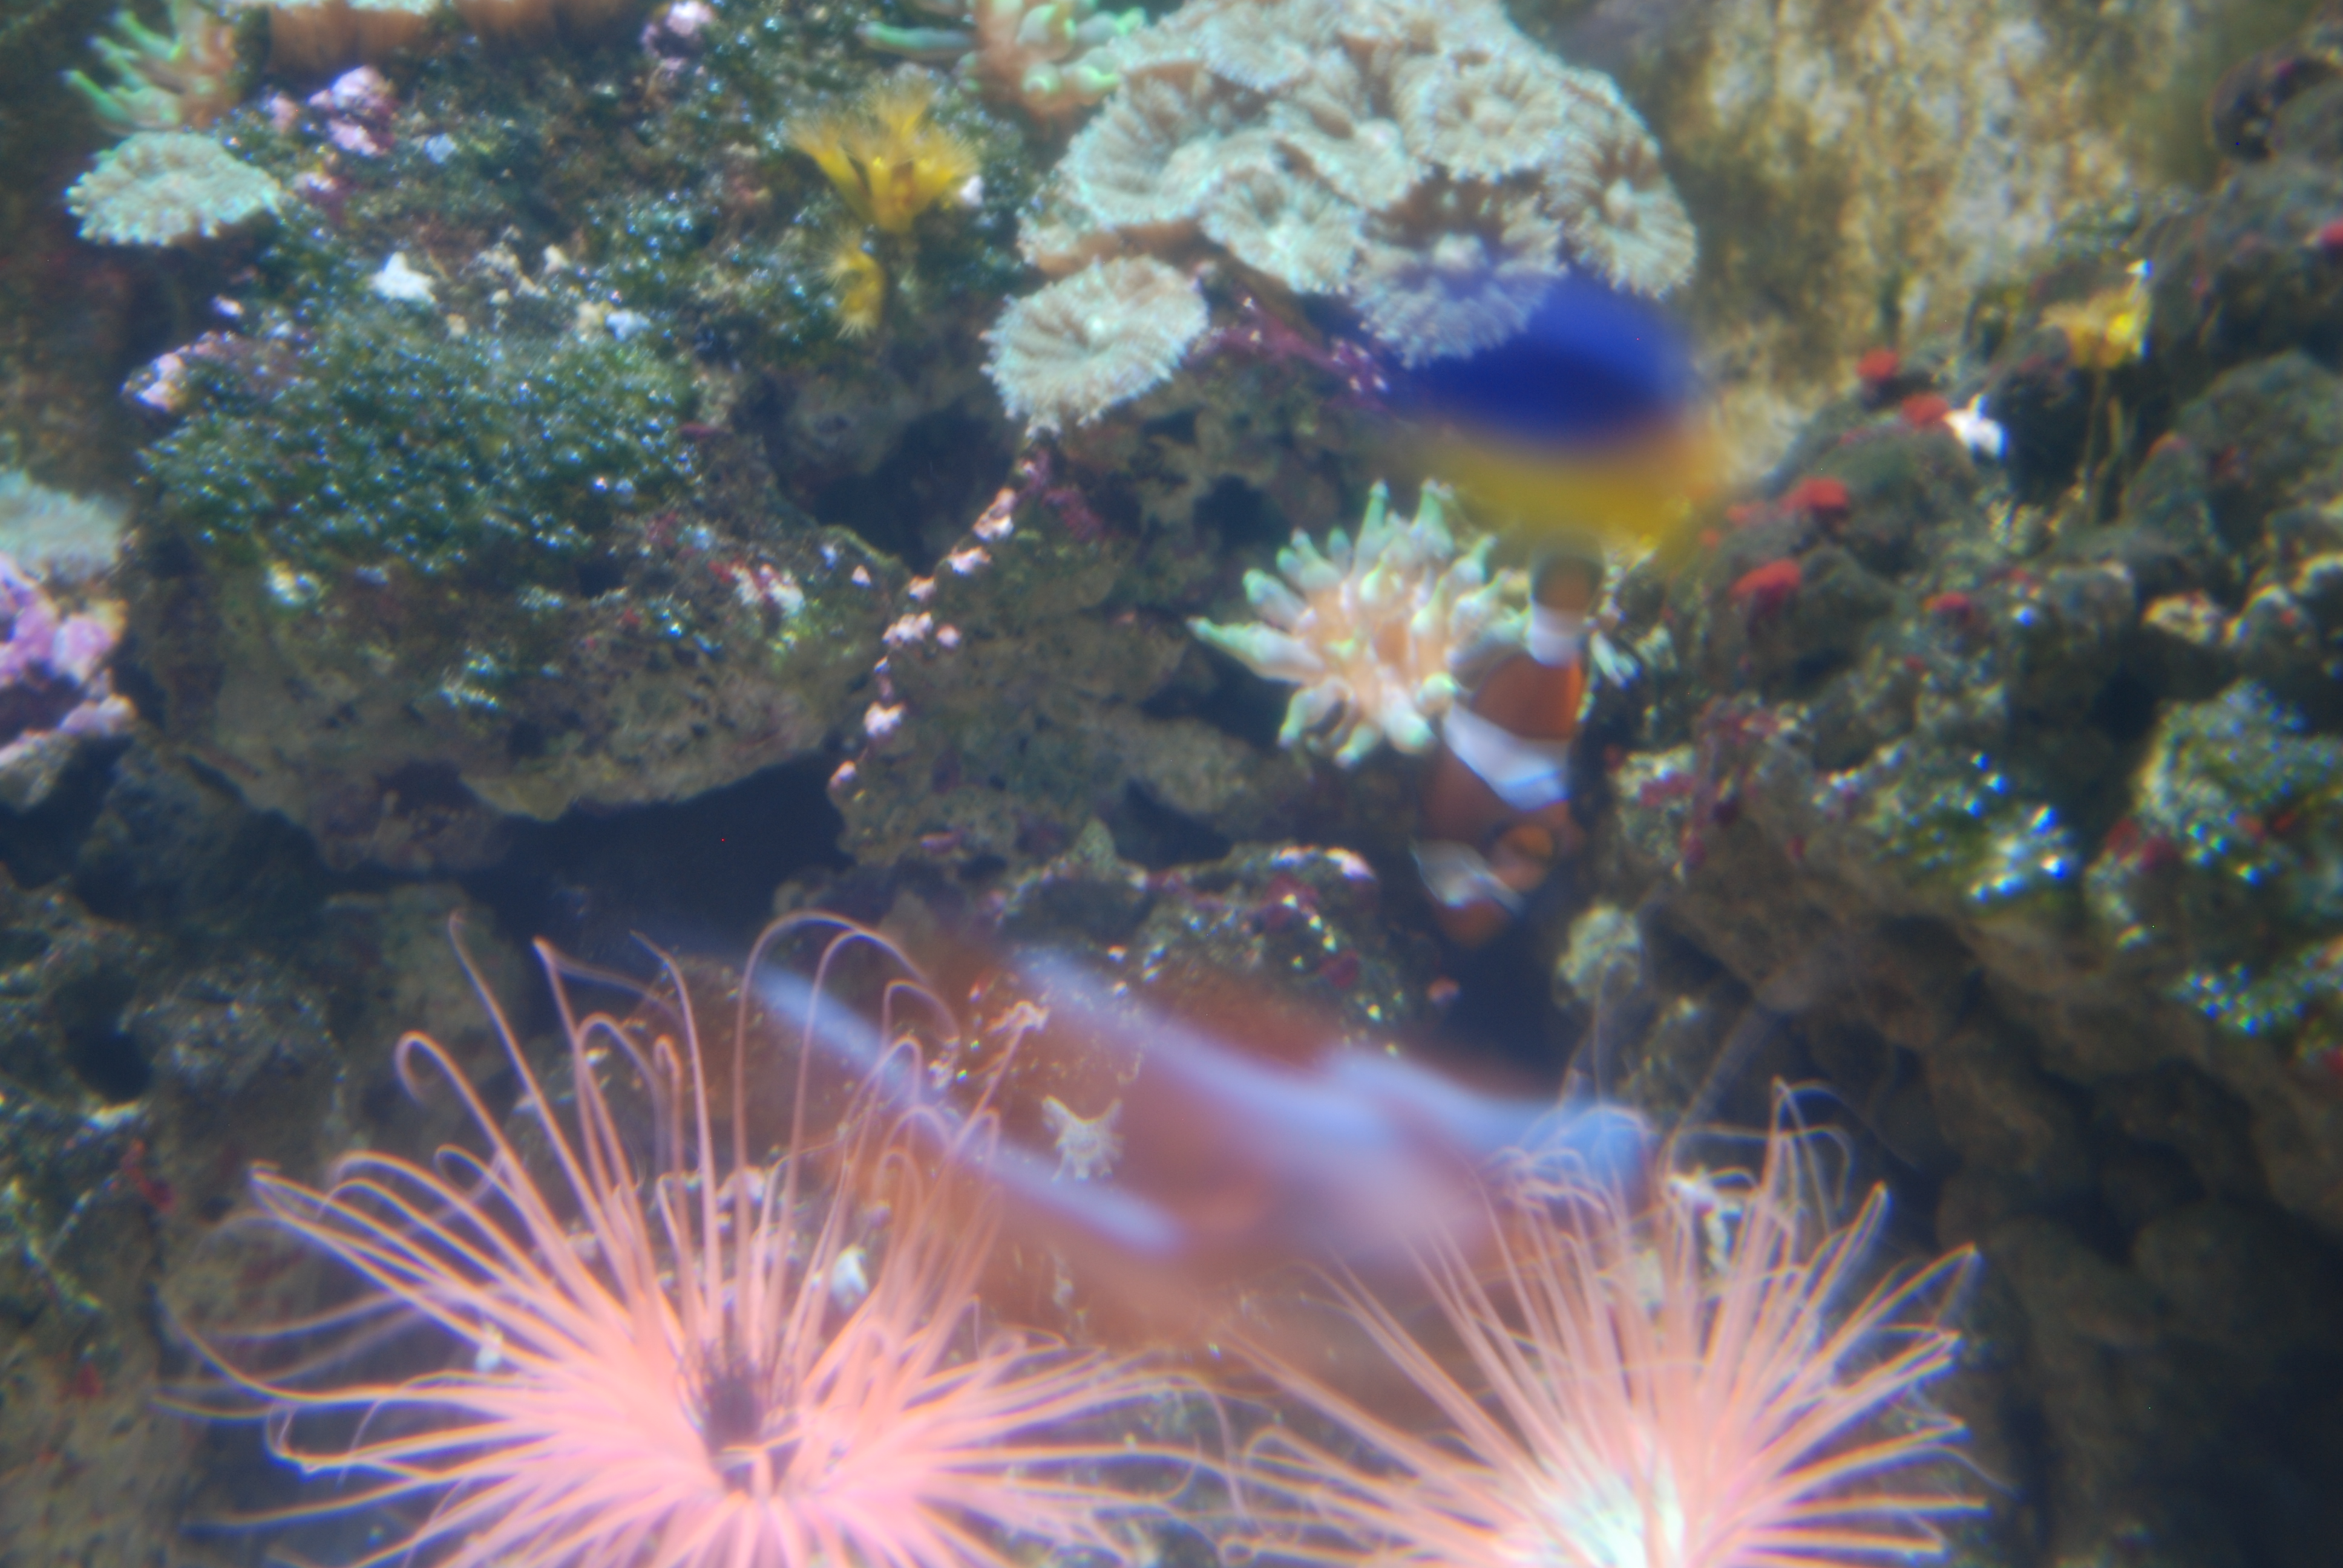 Clownfisch be-sucht Seeanemonen